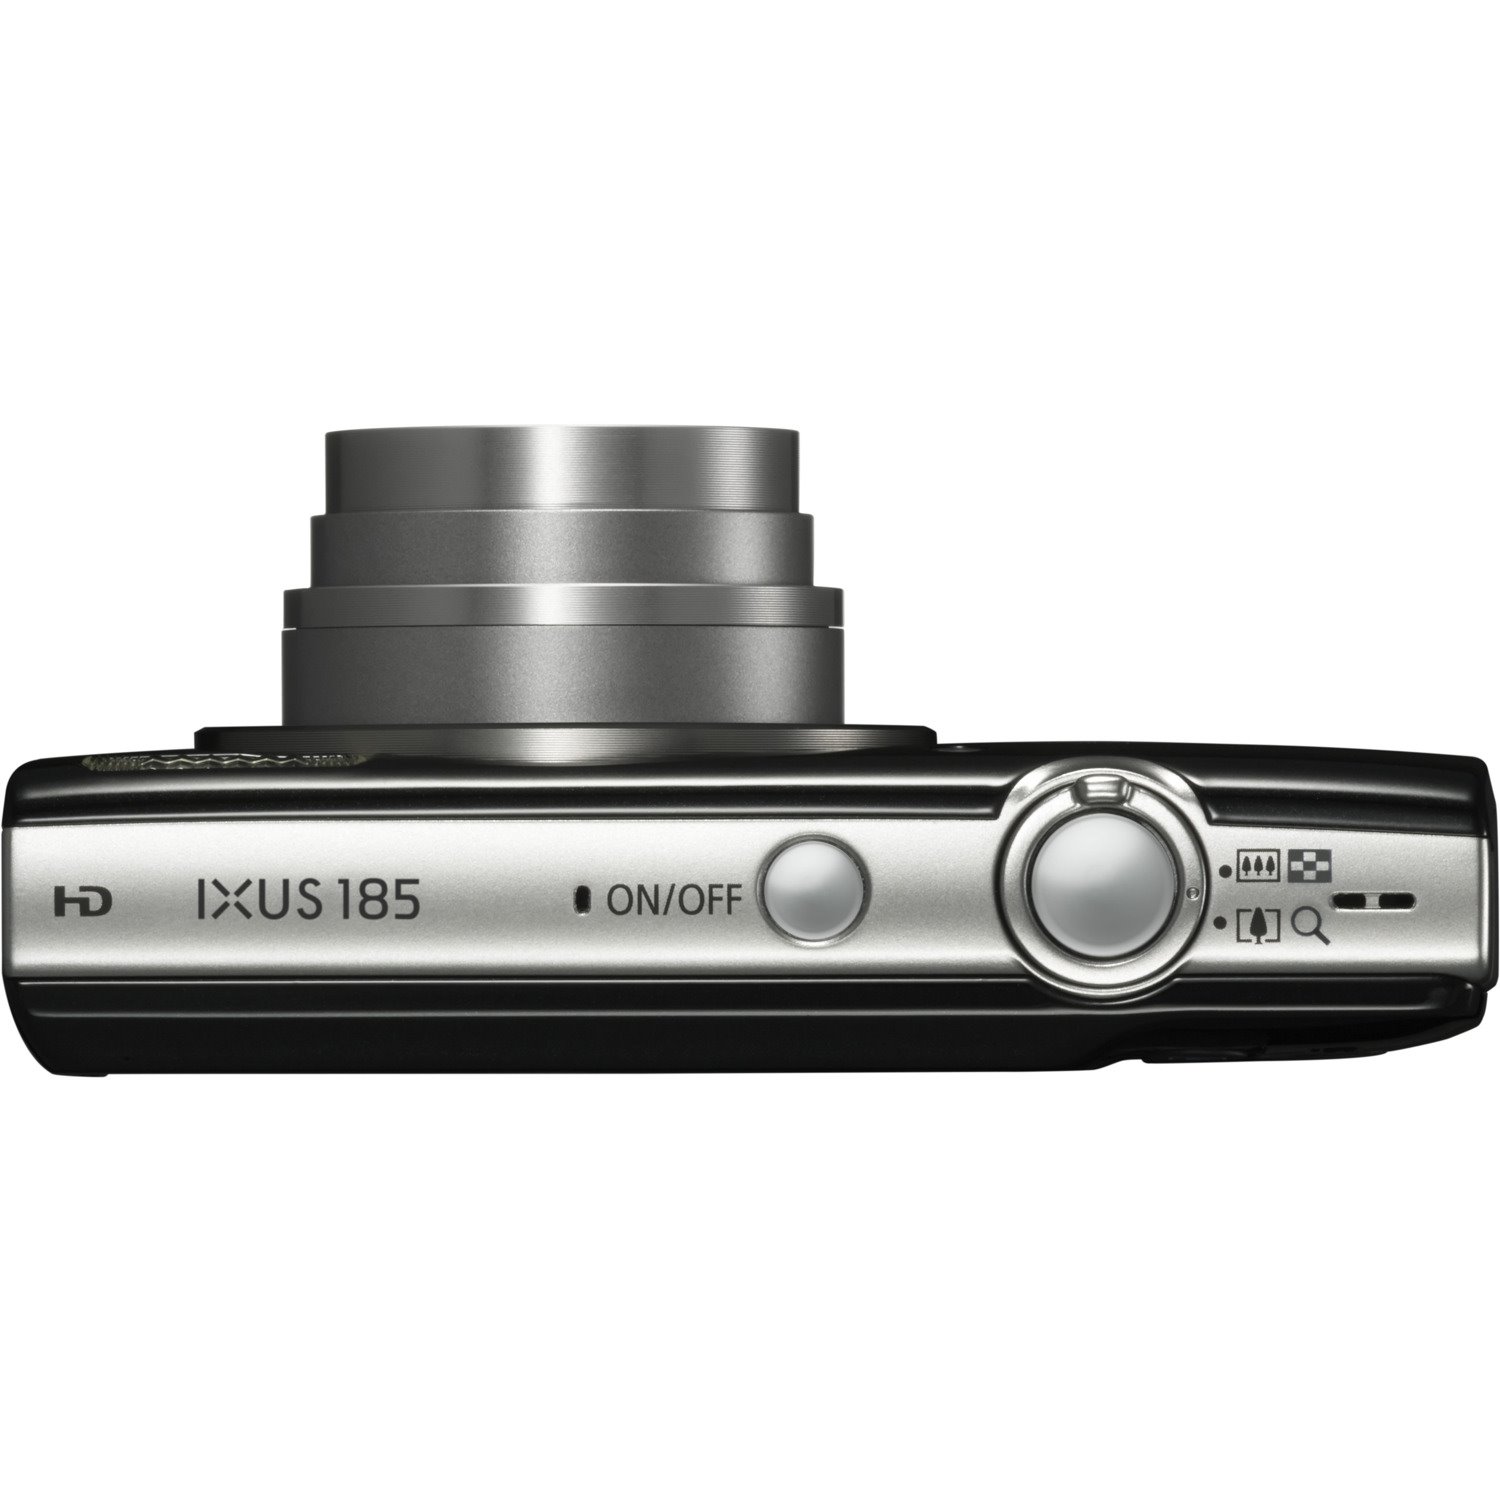 Canon IXUS 185 20 Megapixel Compact Camera - Black